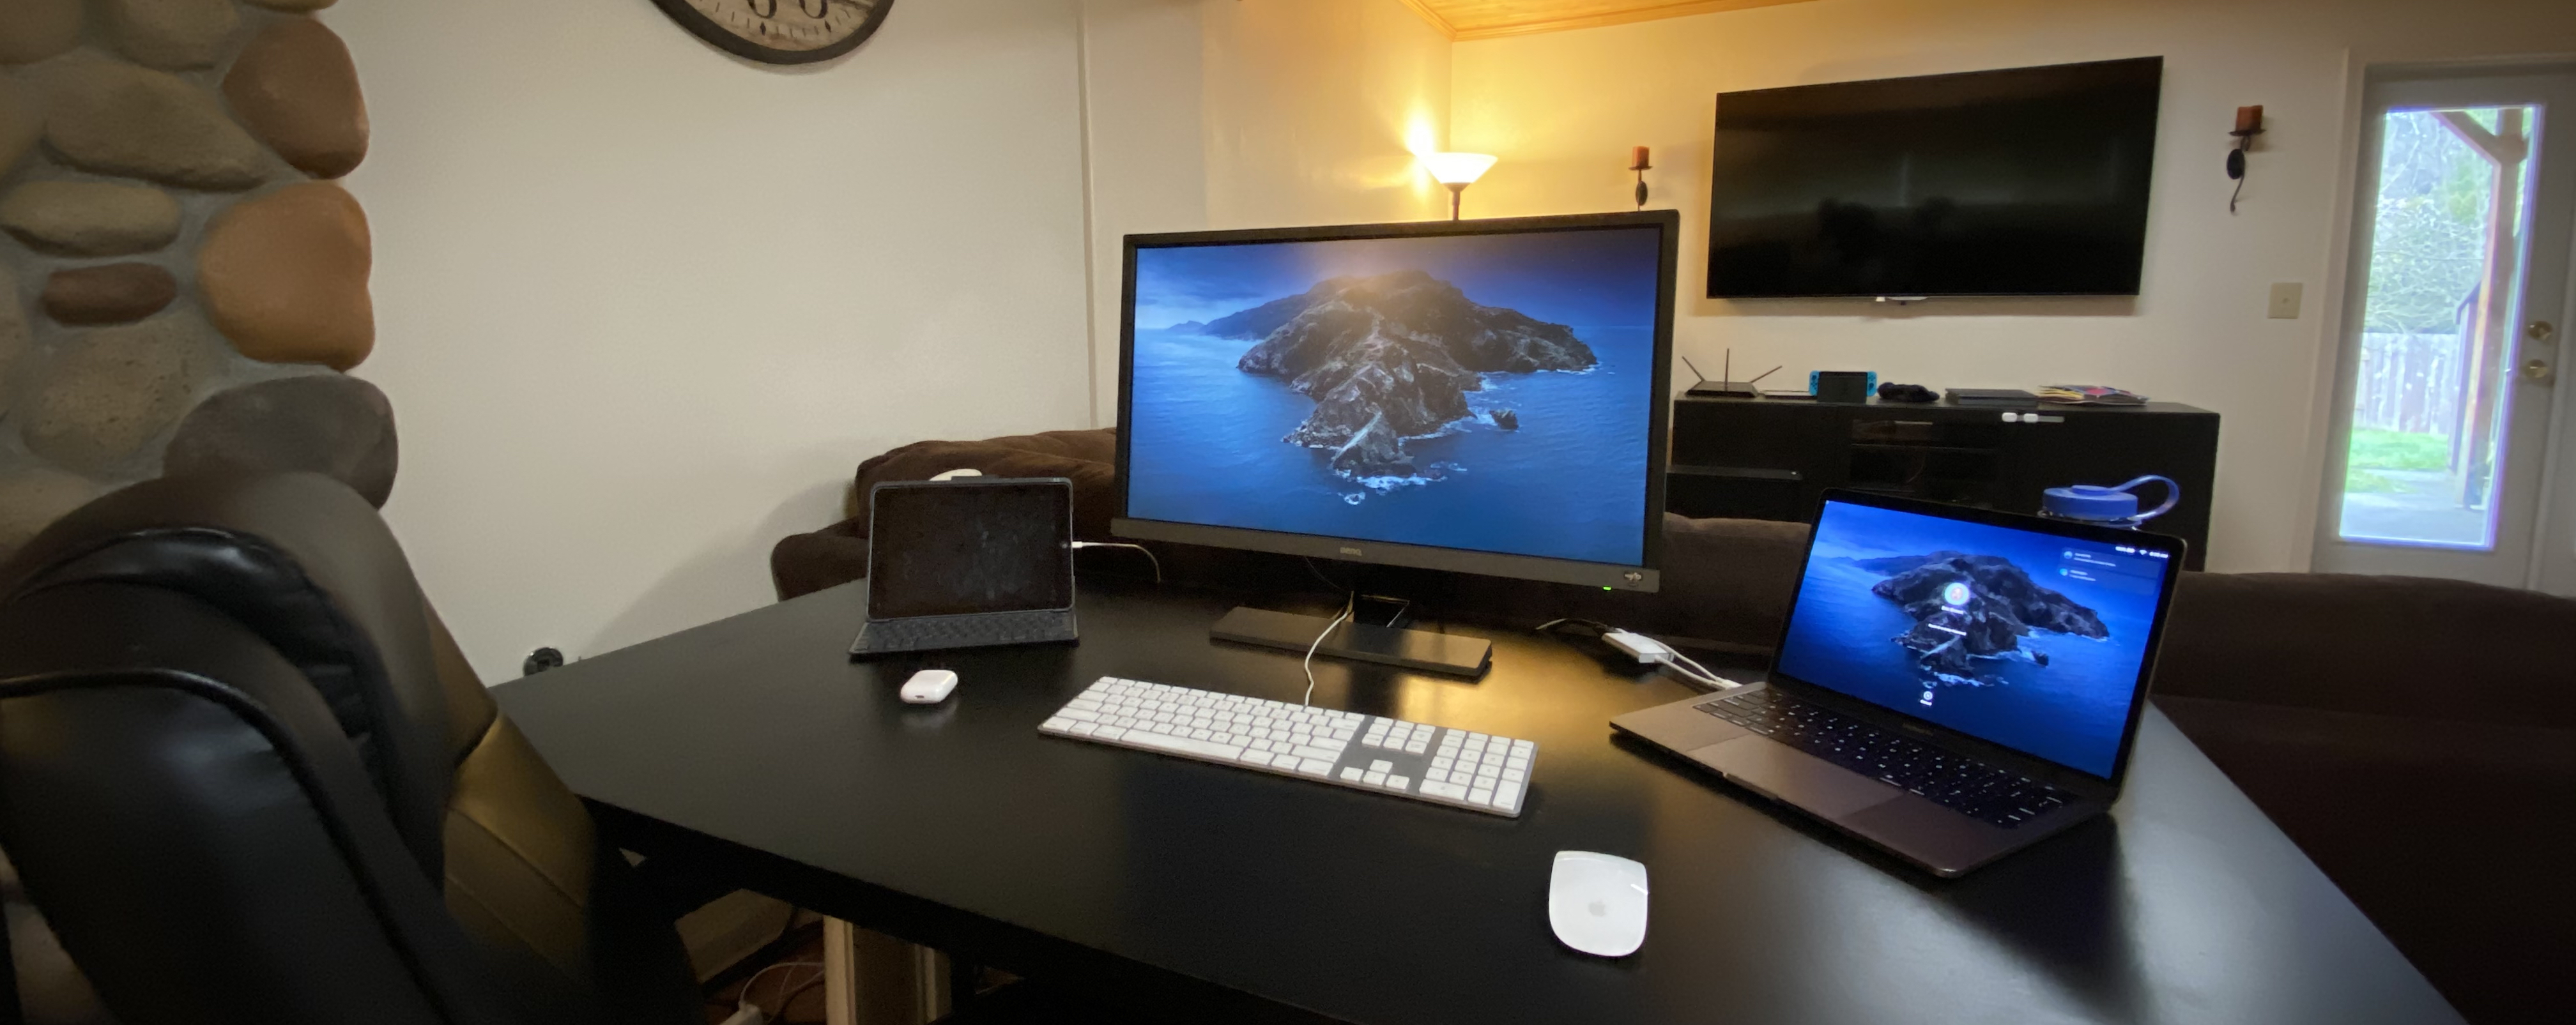 Eric Brown\u0027s home office desk setup